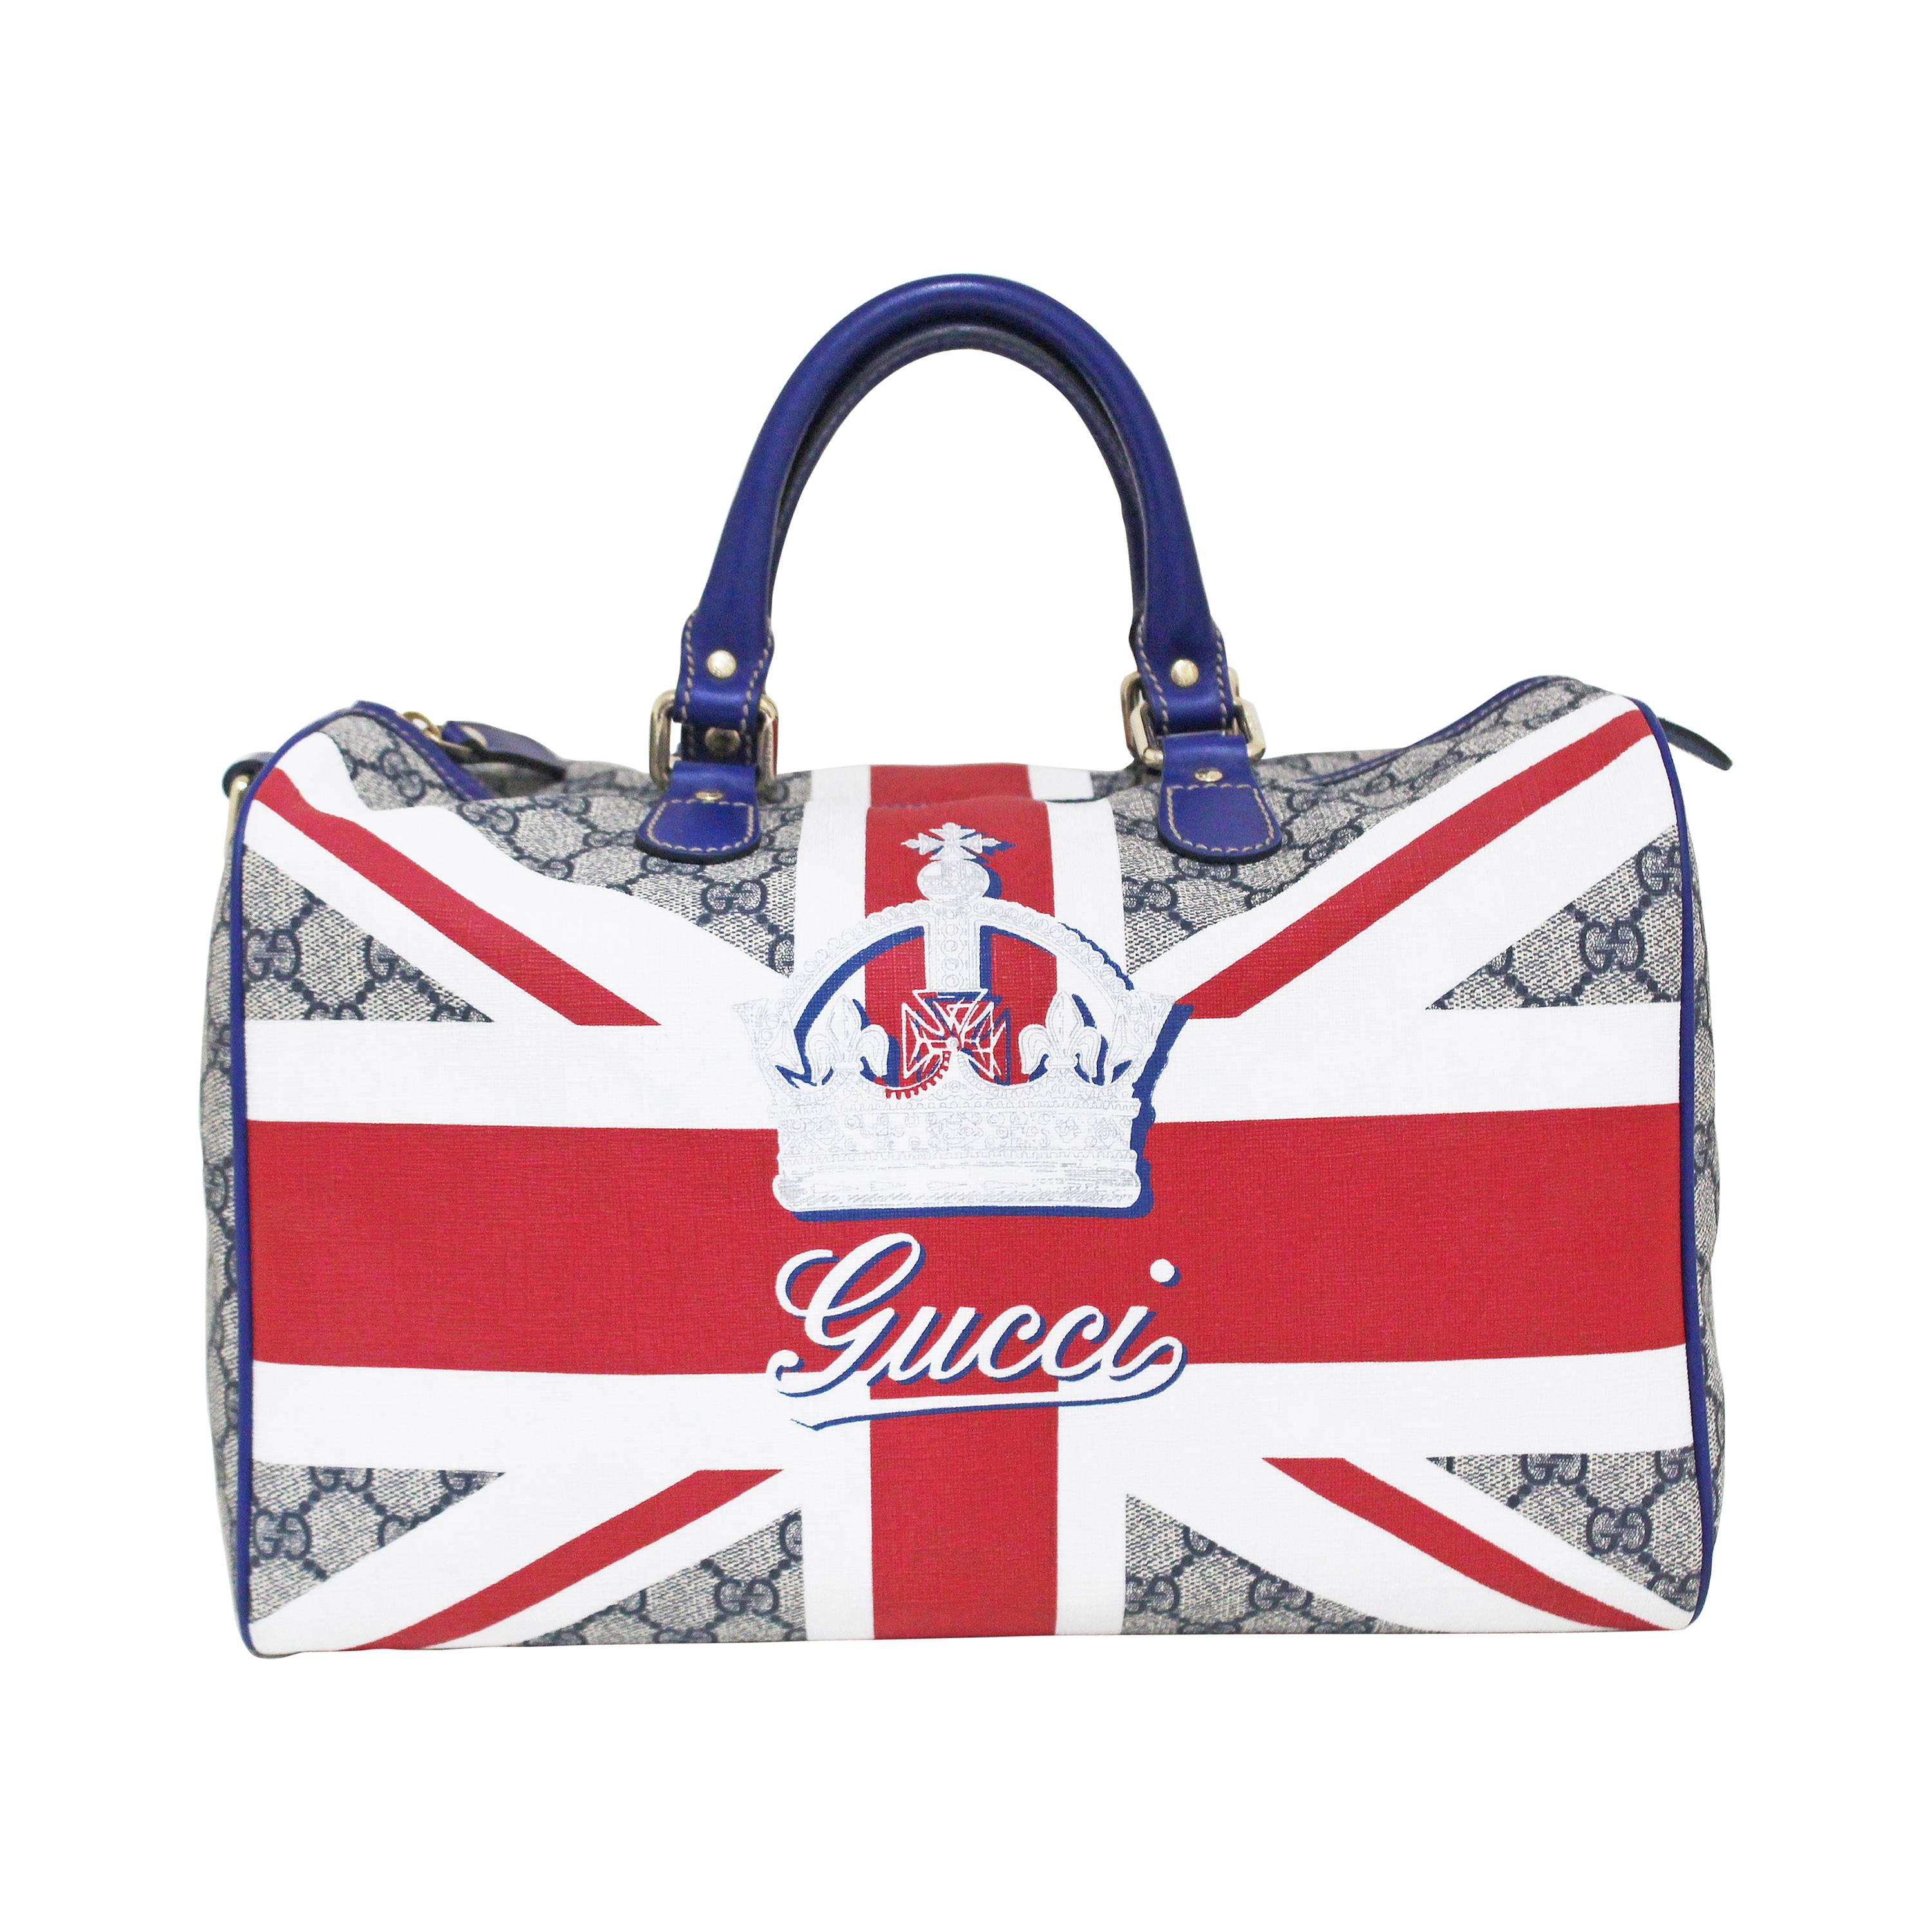 Limited Edition Gucci Union Jack Sloaney bag, c. 2009 